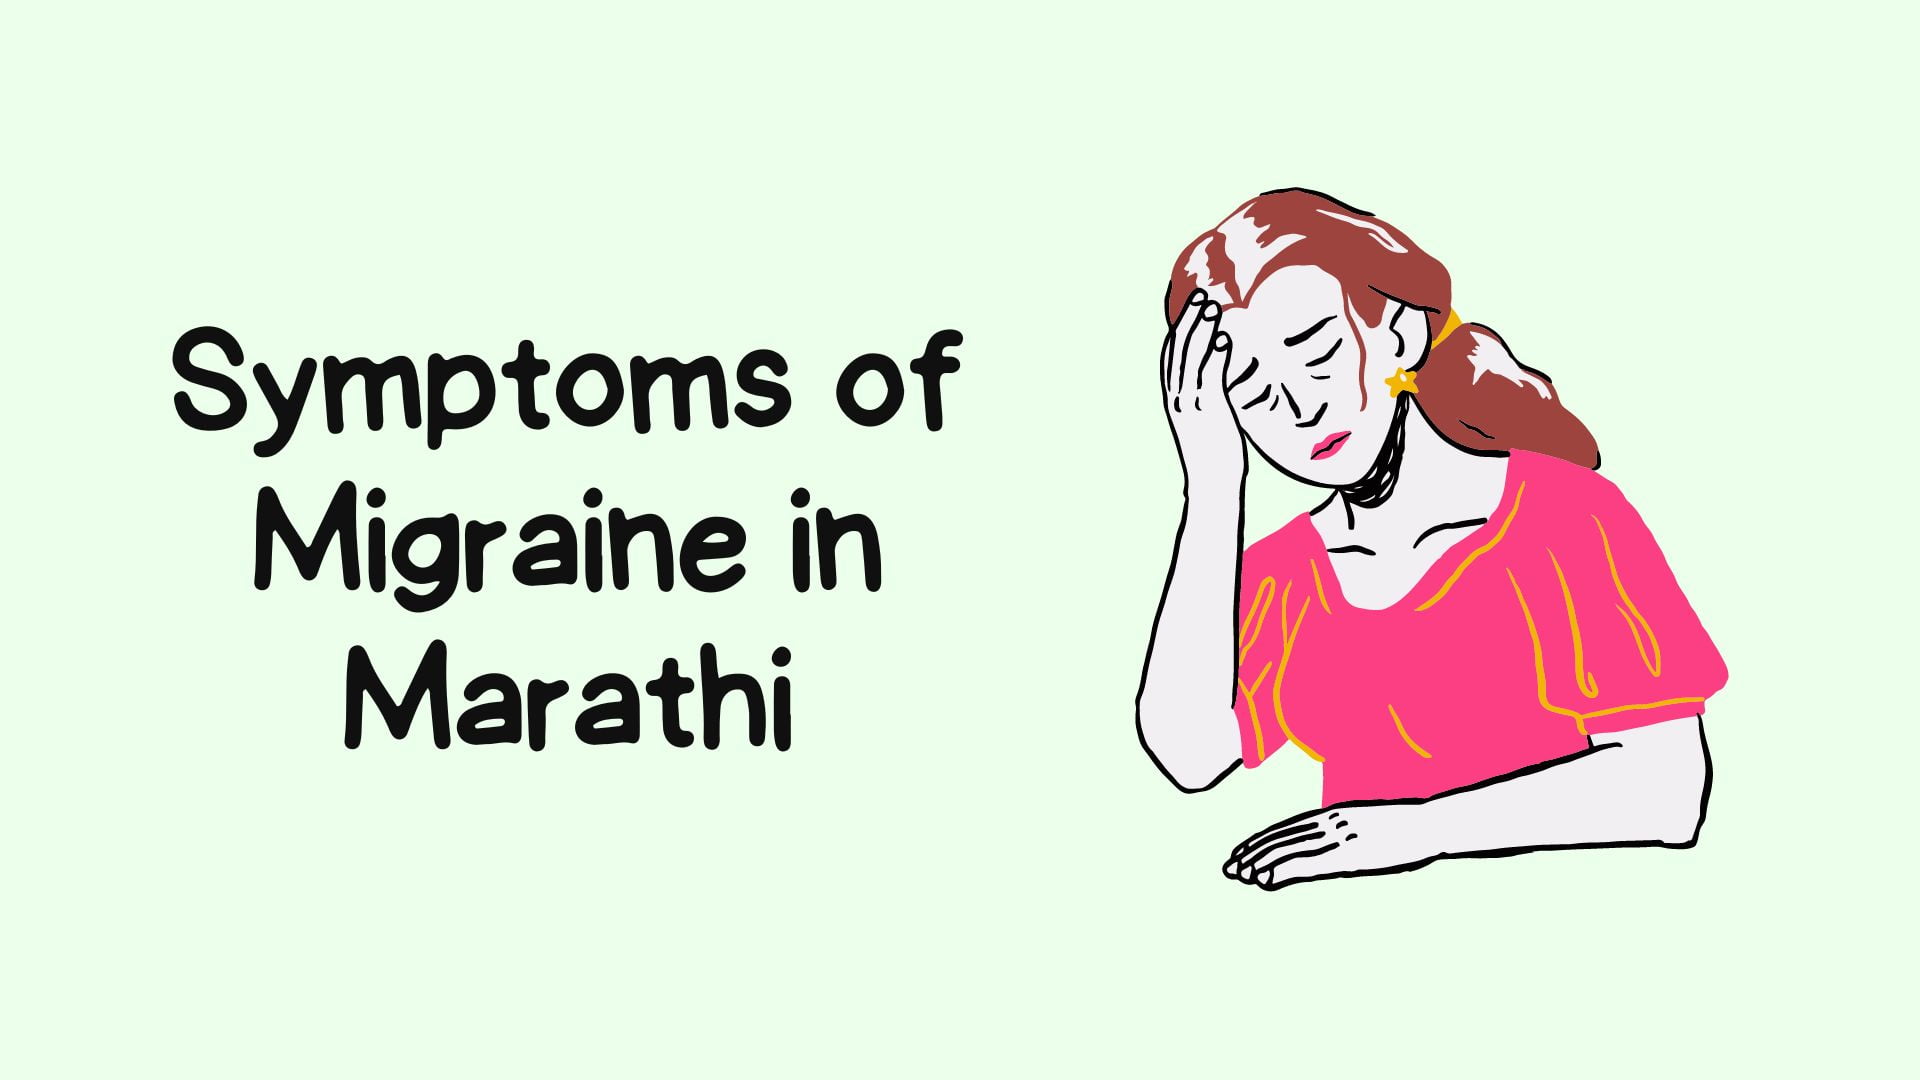 Symptoms of Migraine in Marathi